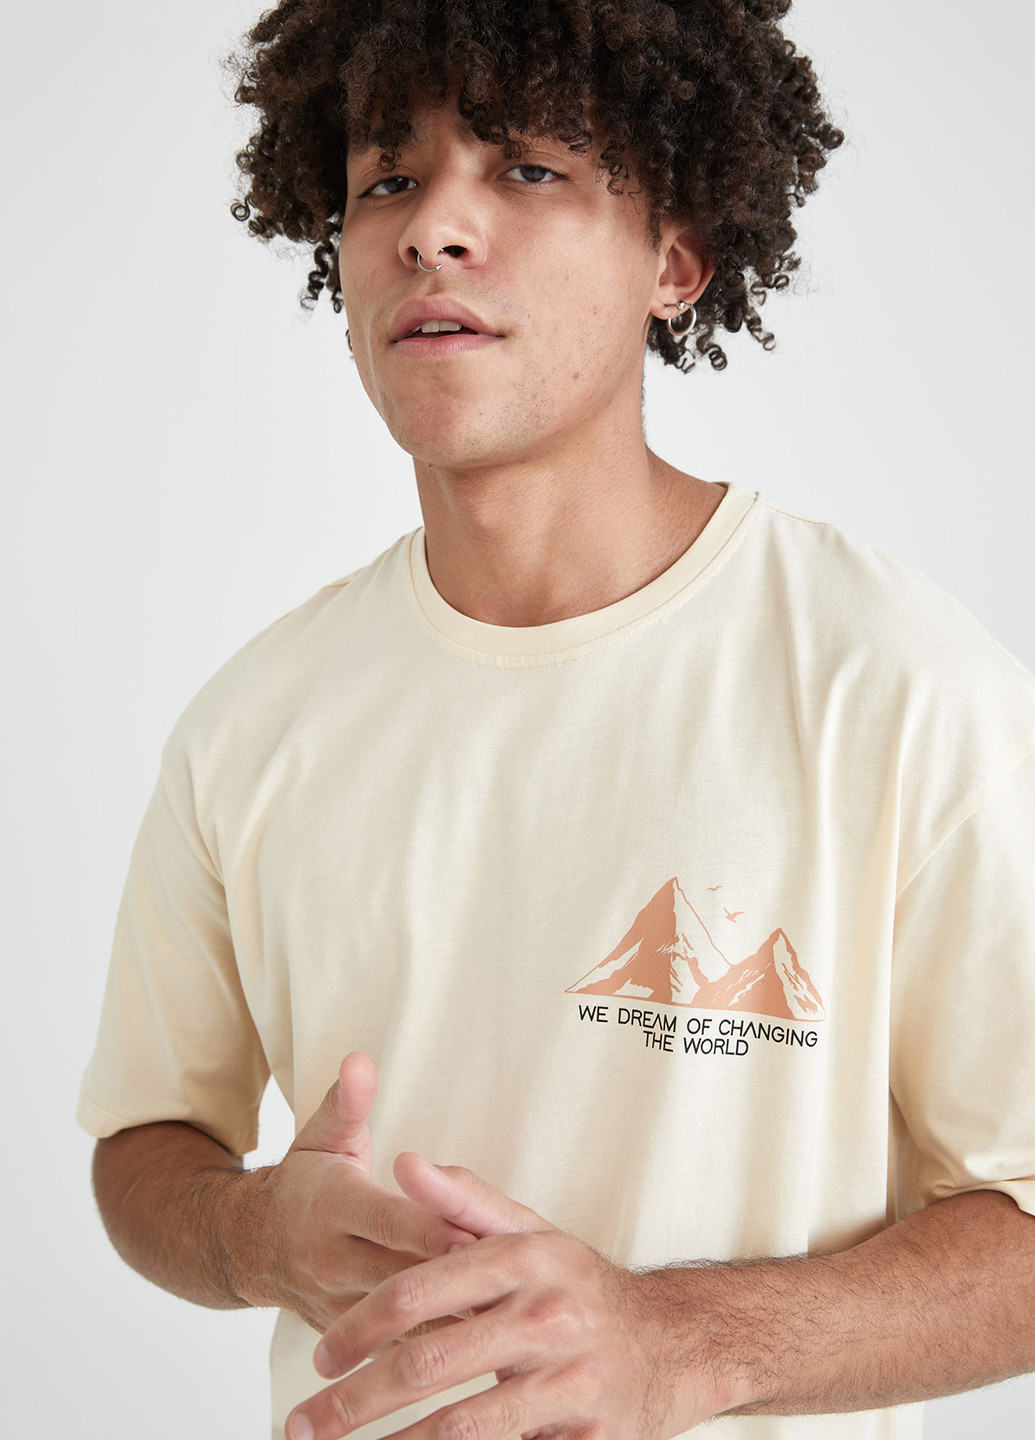 Айвори летняя футболка DeFacto